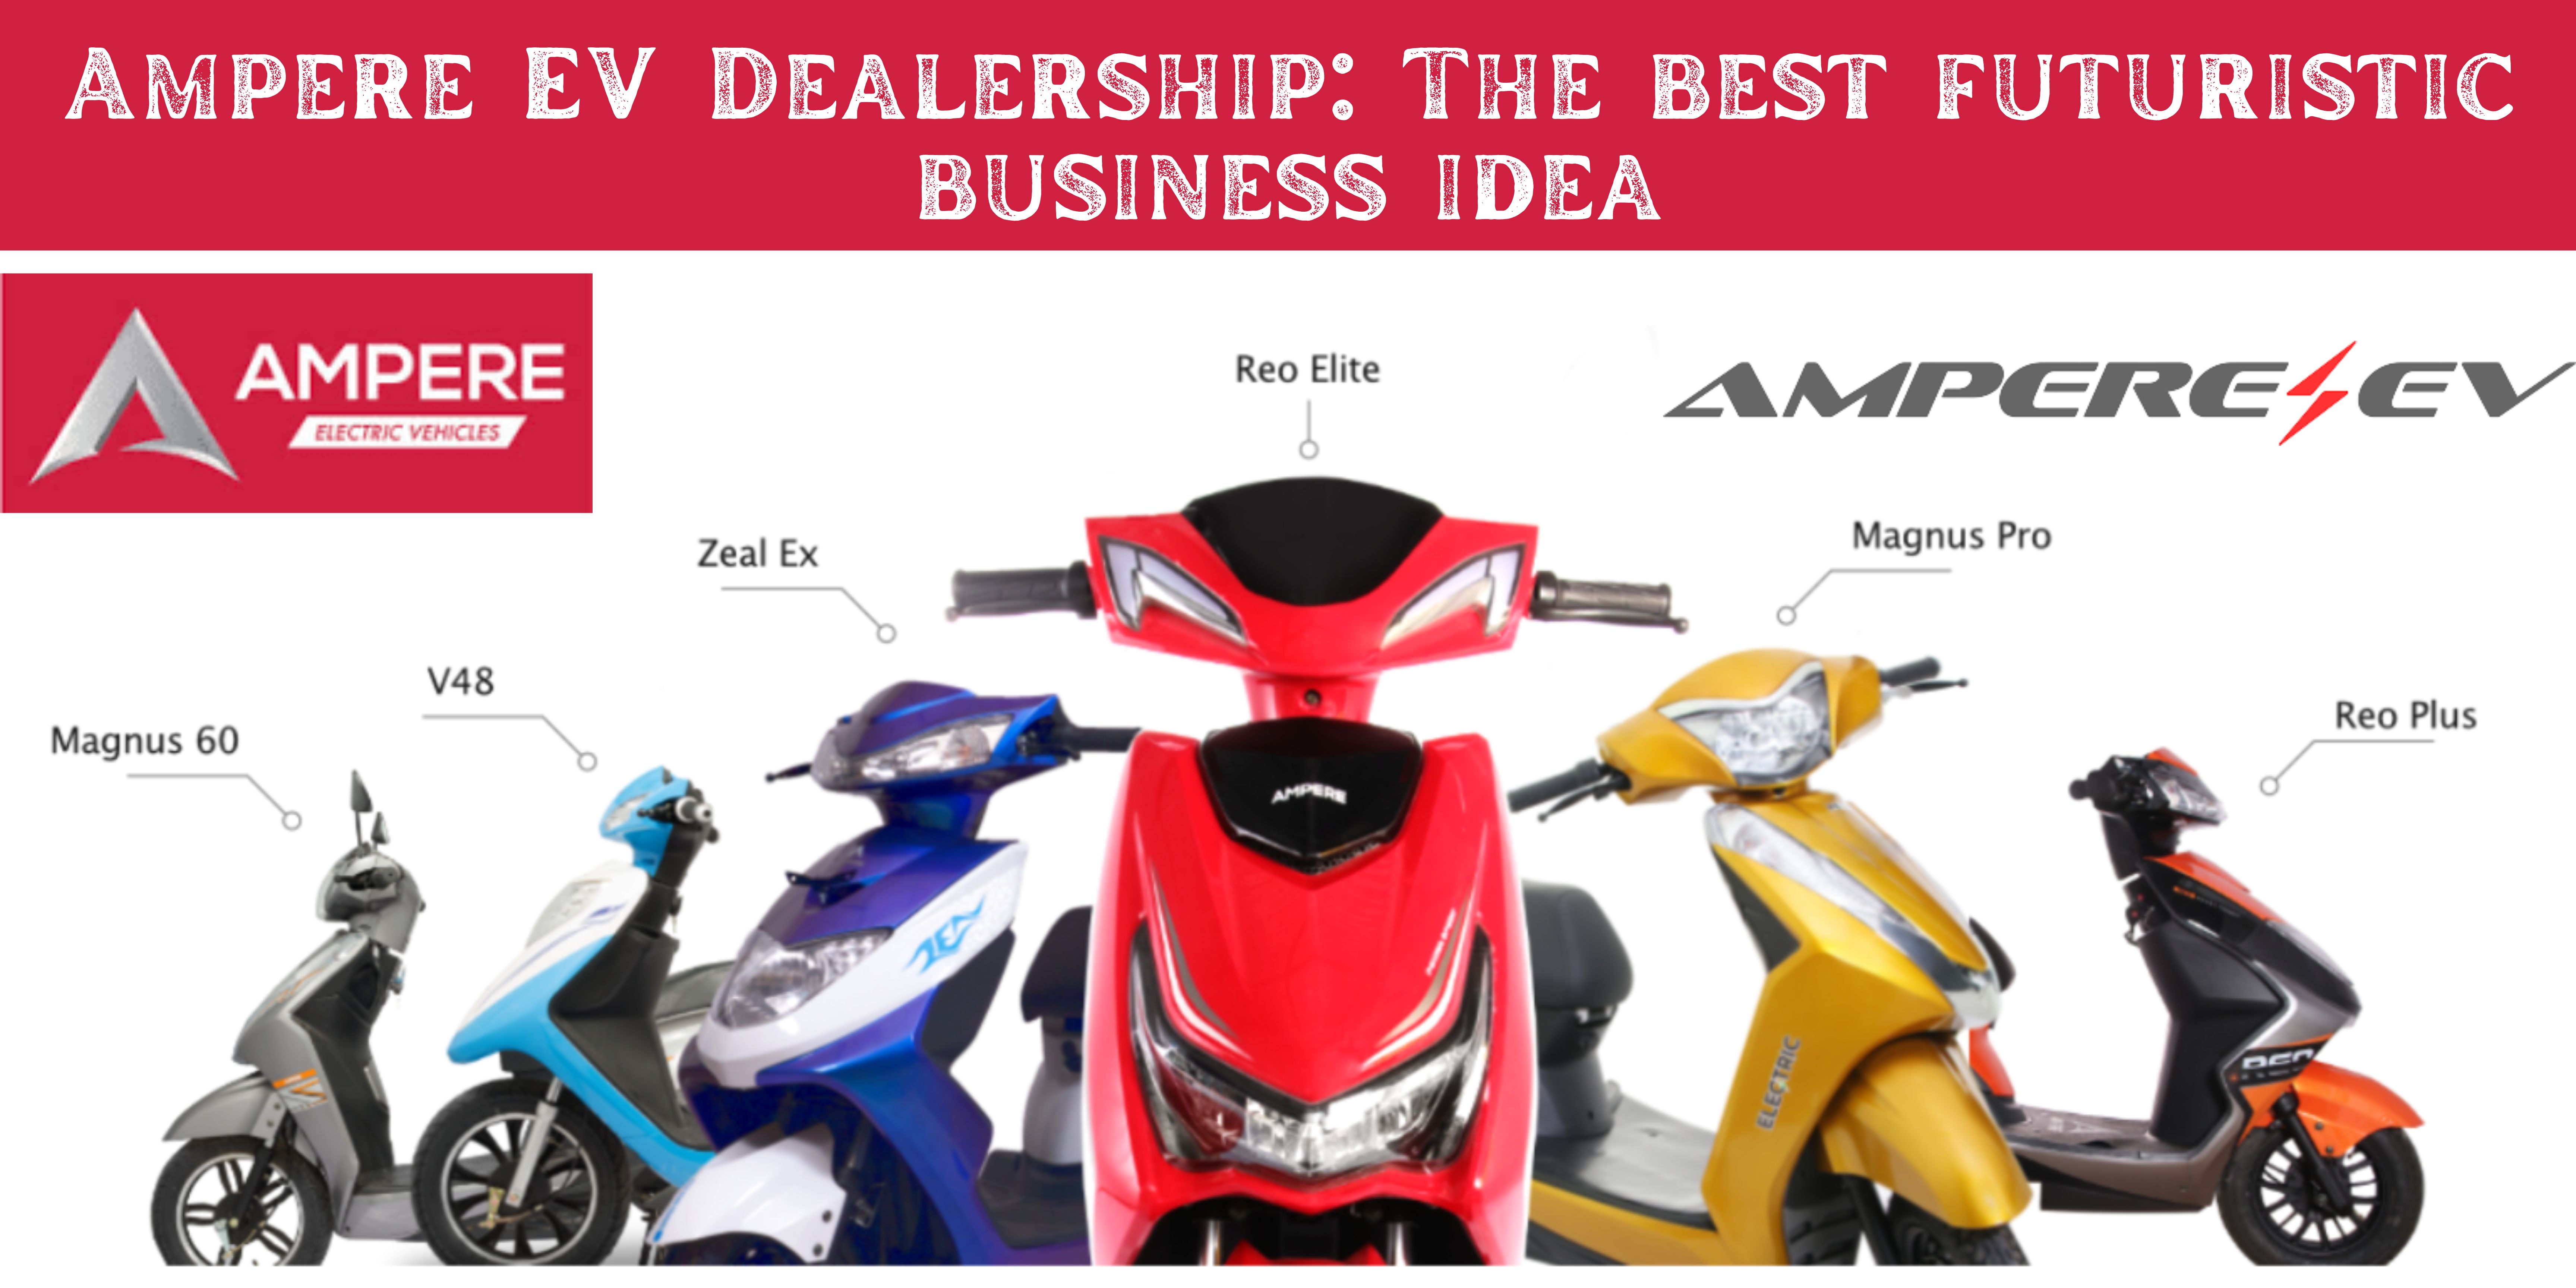 How to Get Ampere EV Dealership: The Best Futuristic Business Idea